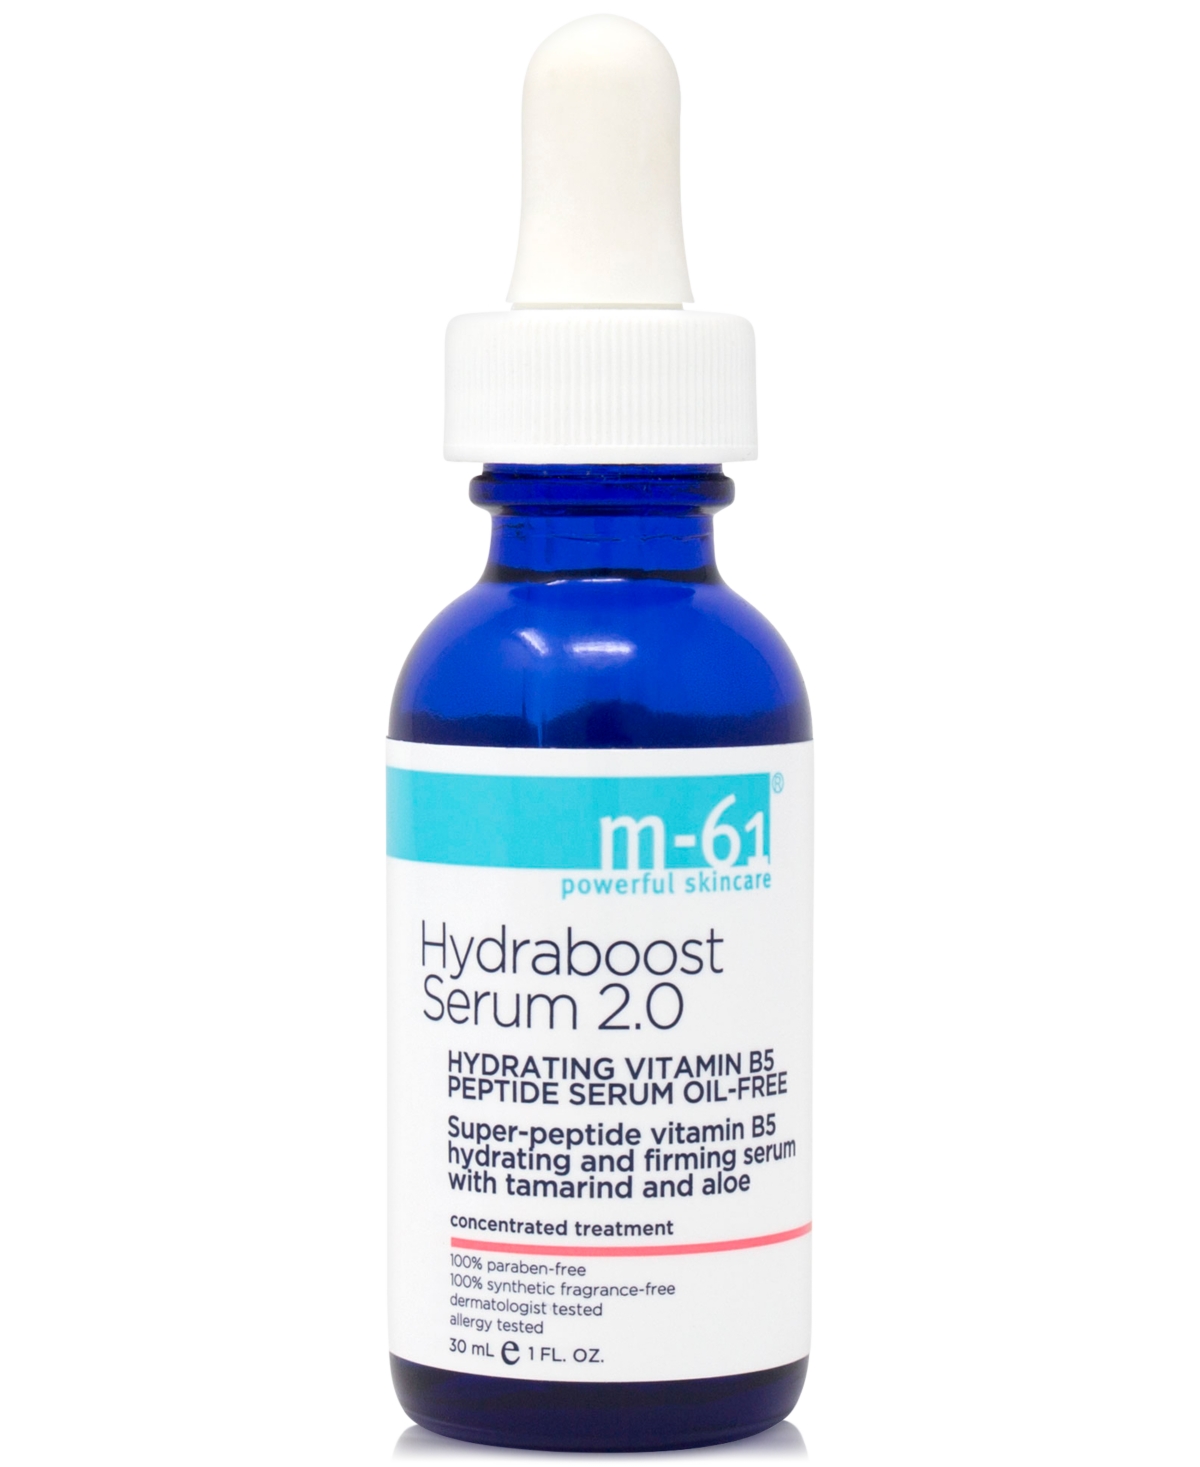 Hydraboost Serum 2.0, 1 oz. - No Size